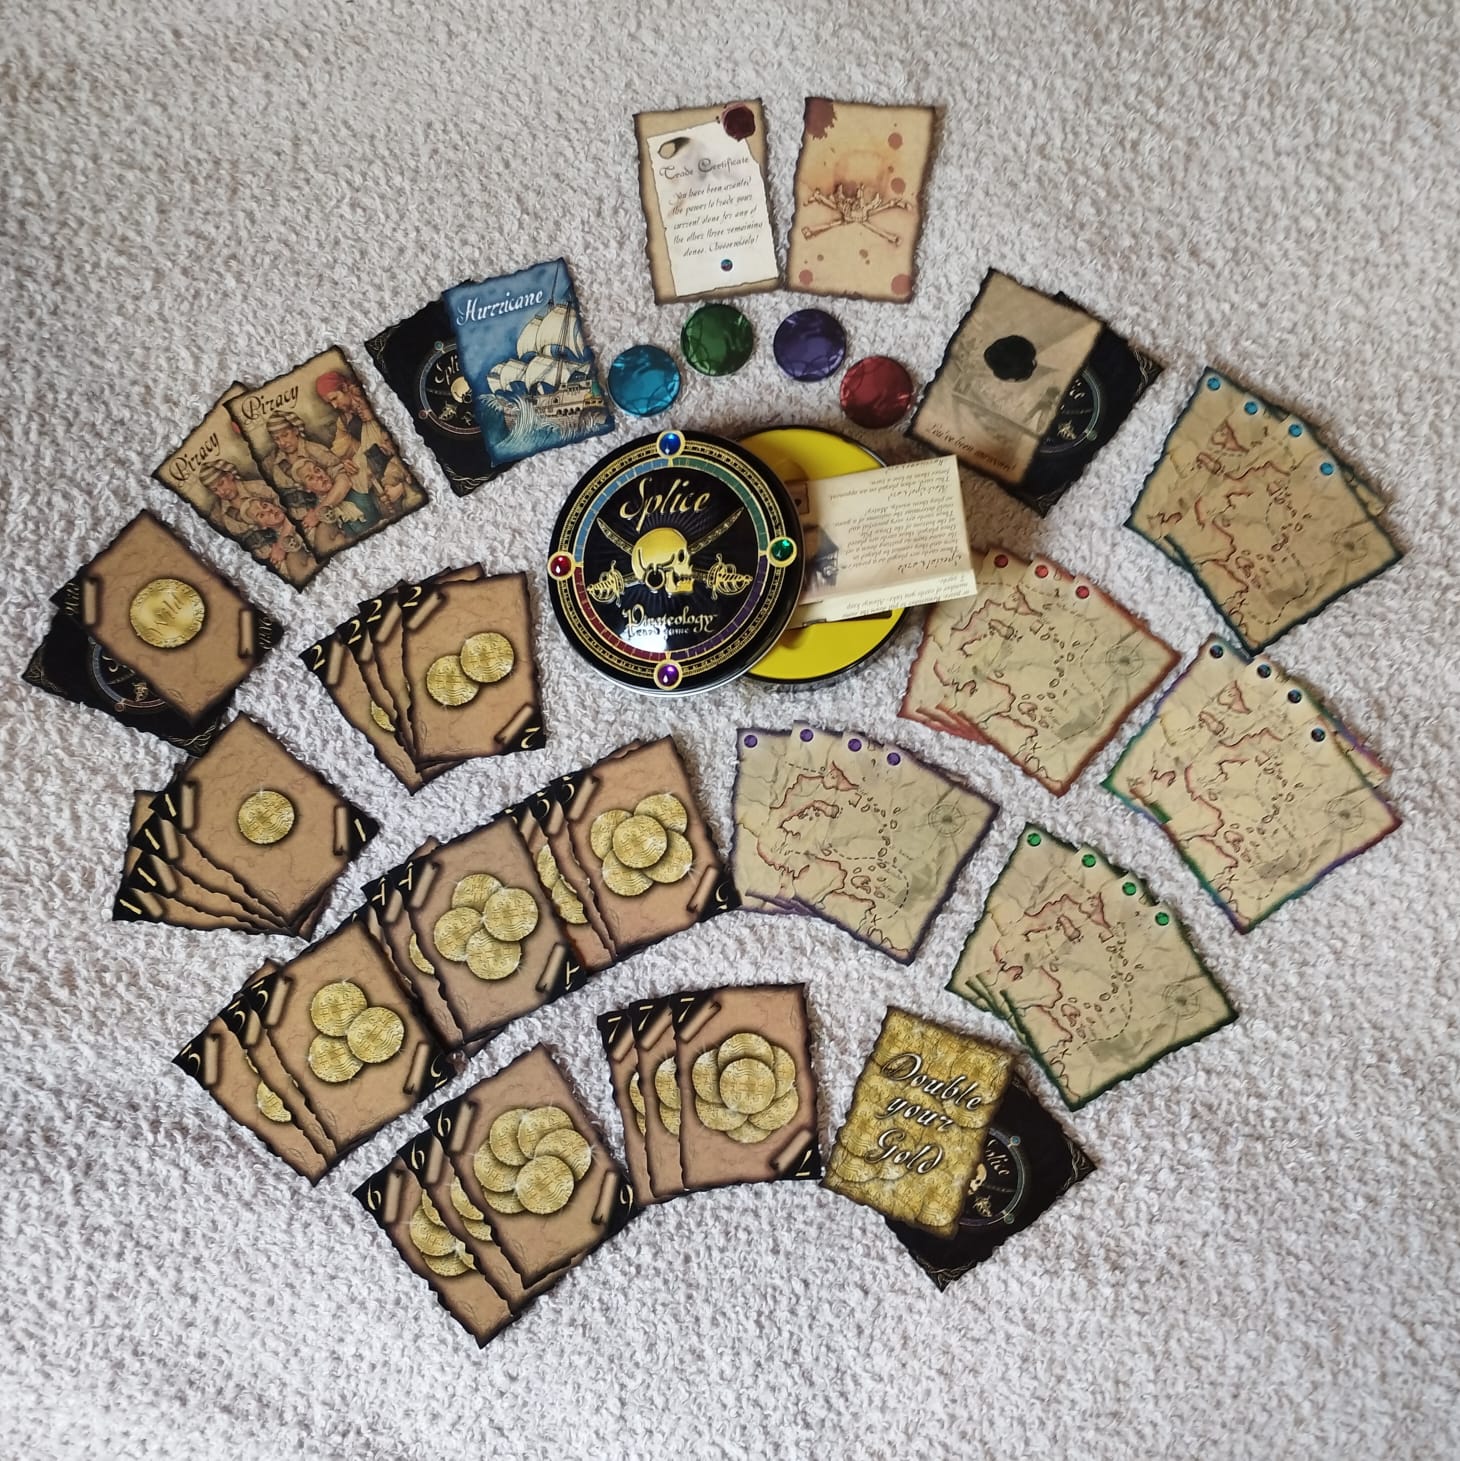 Pirateology karte (cards)